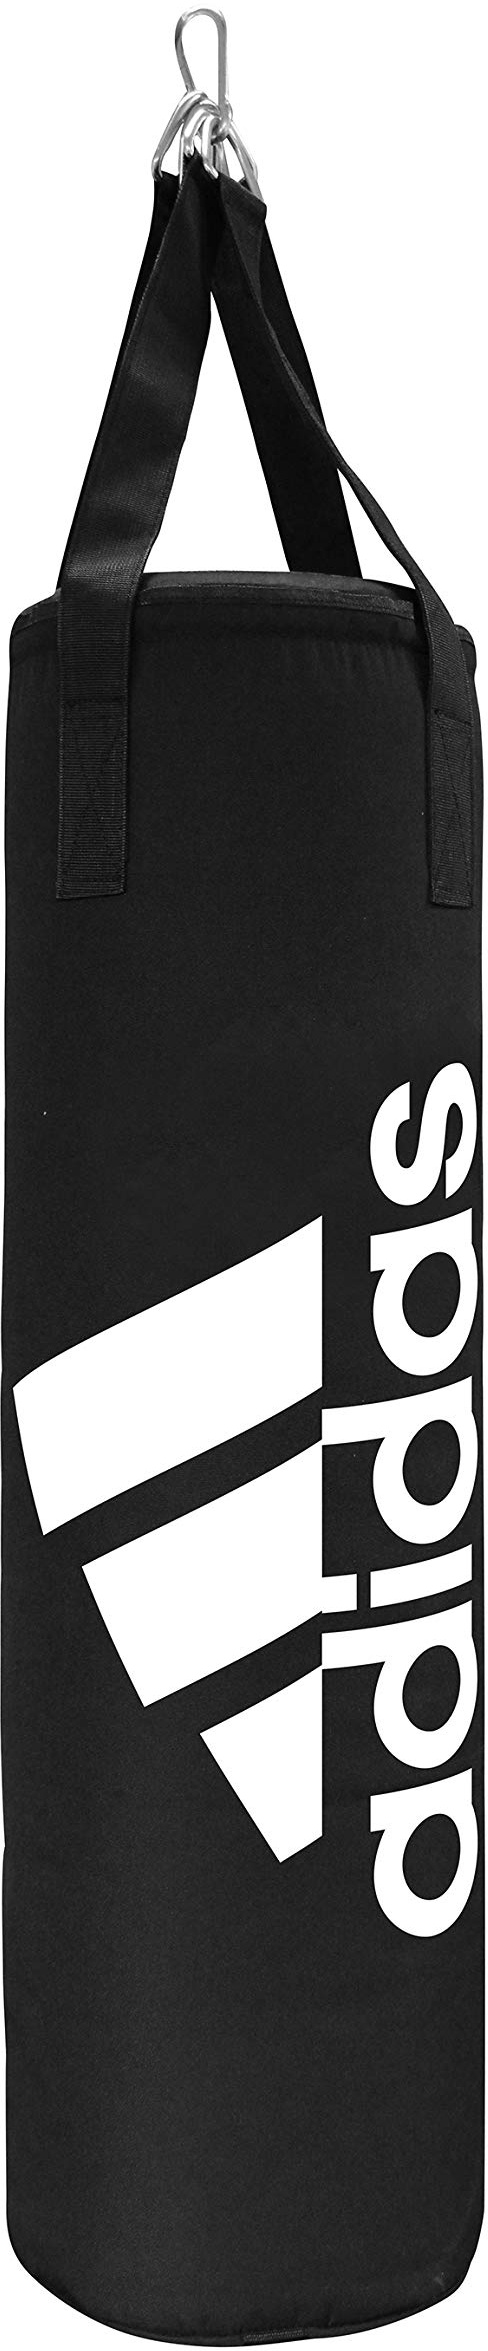 adidas Unisex – Erwachsene Boxing Bag Nylon Boxsack, Schwarz, 90 cm